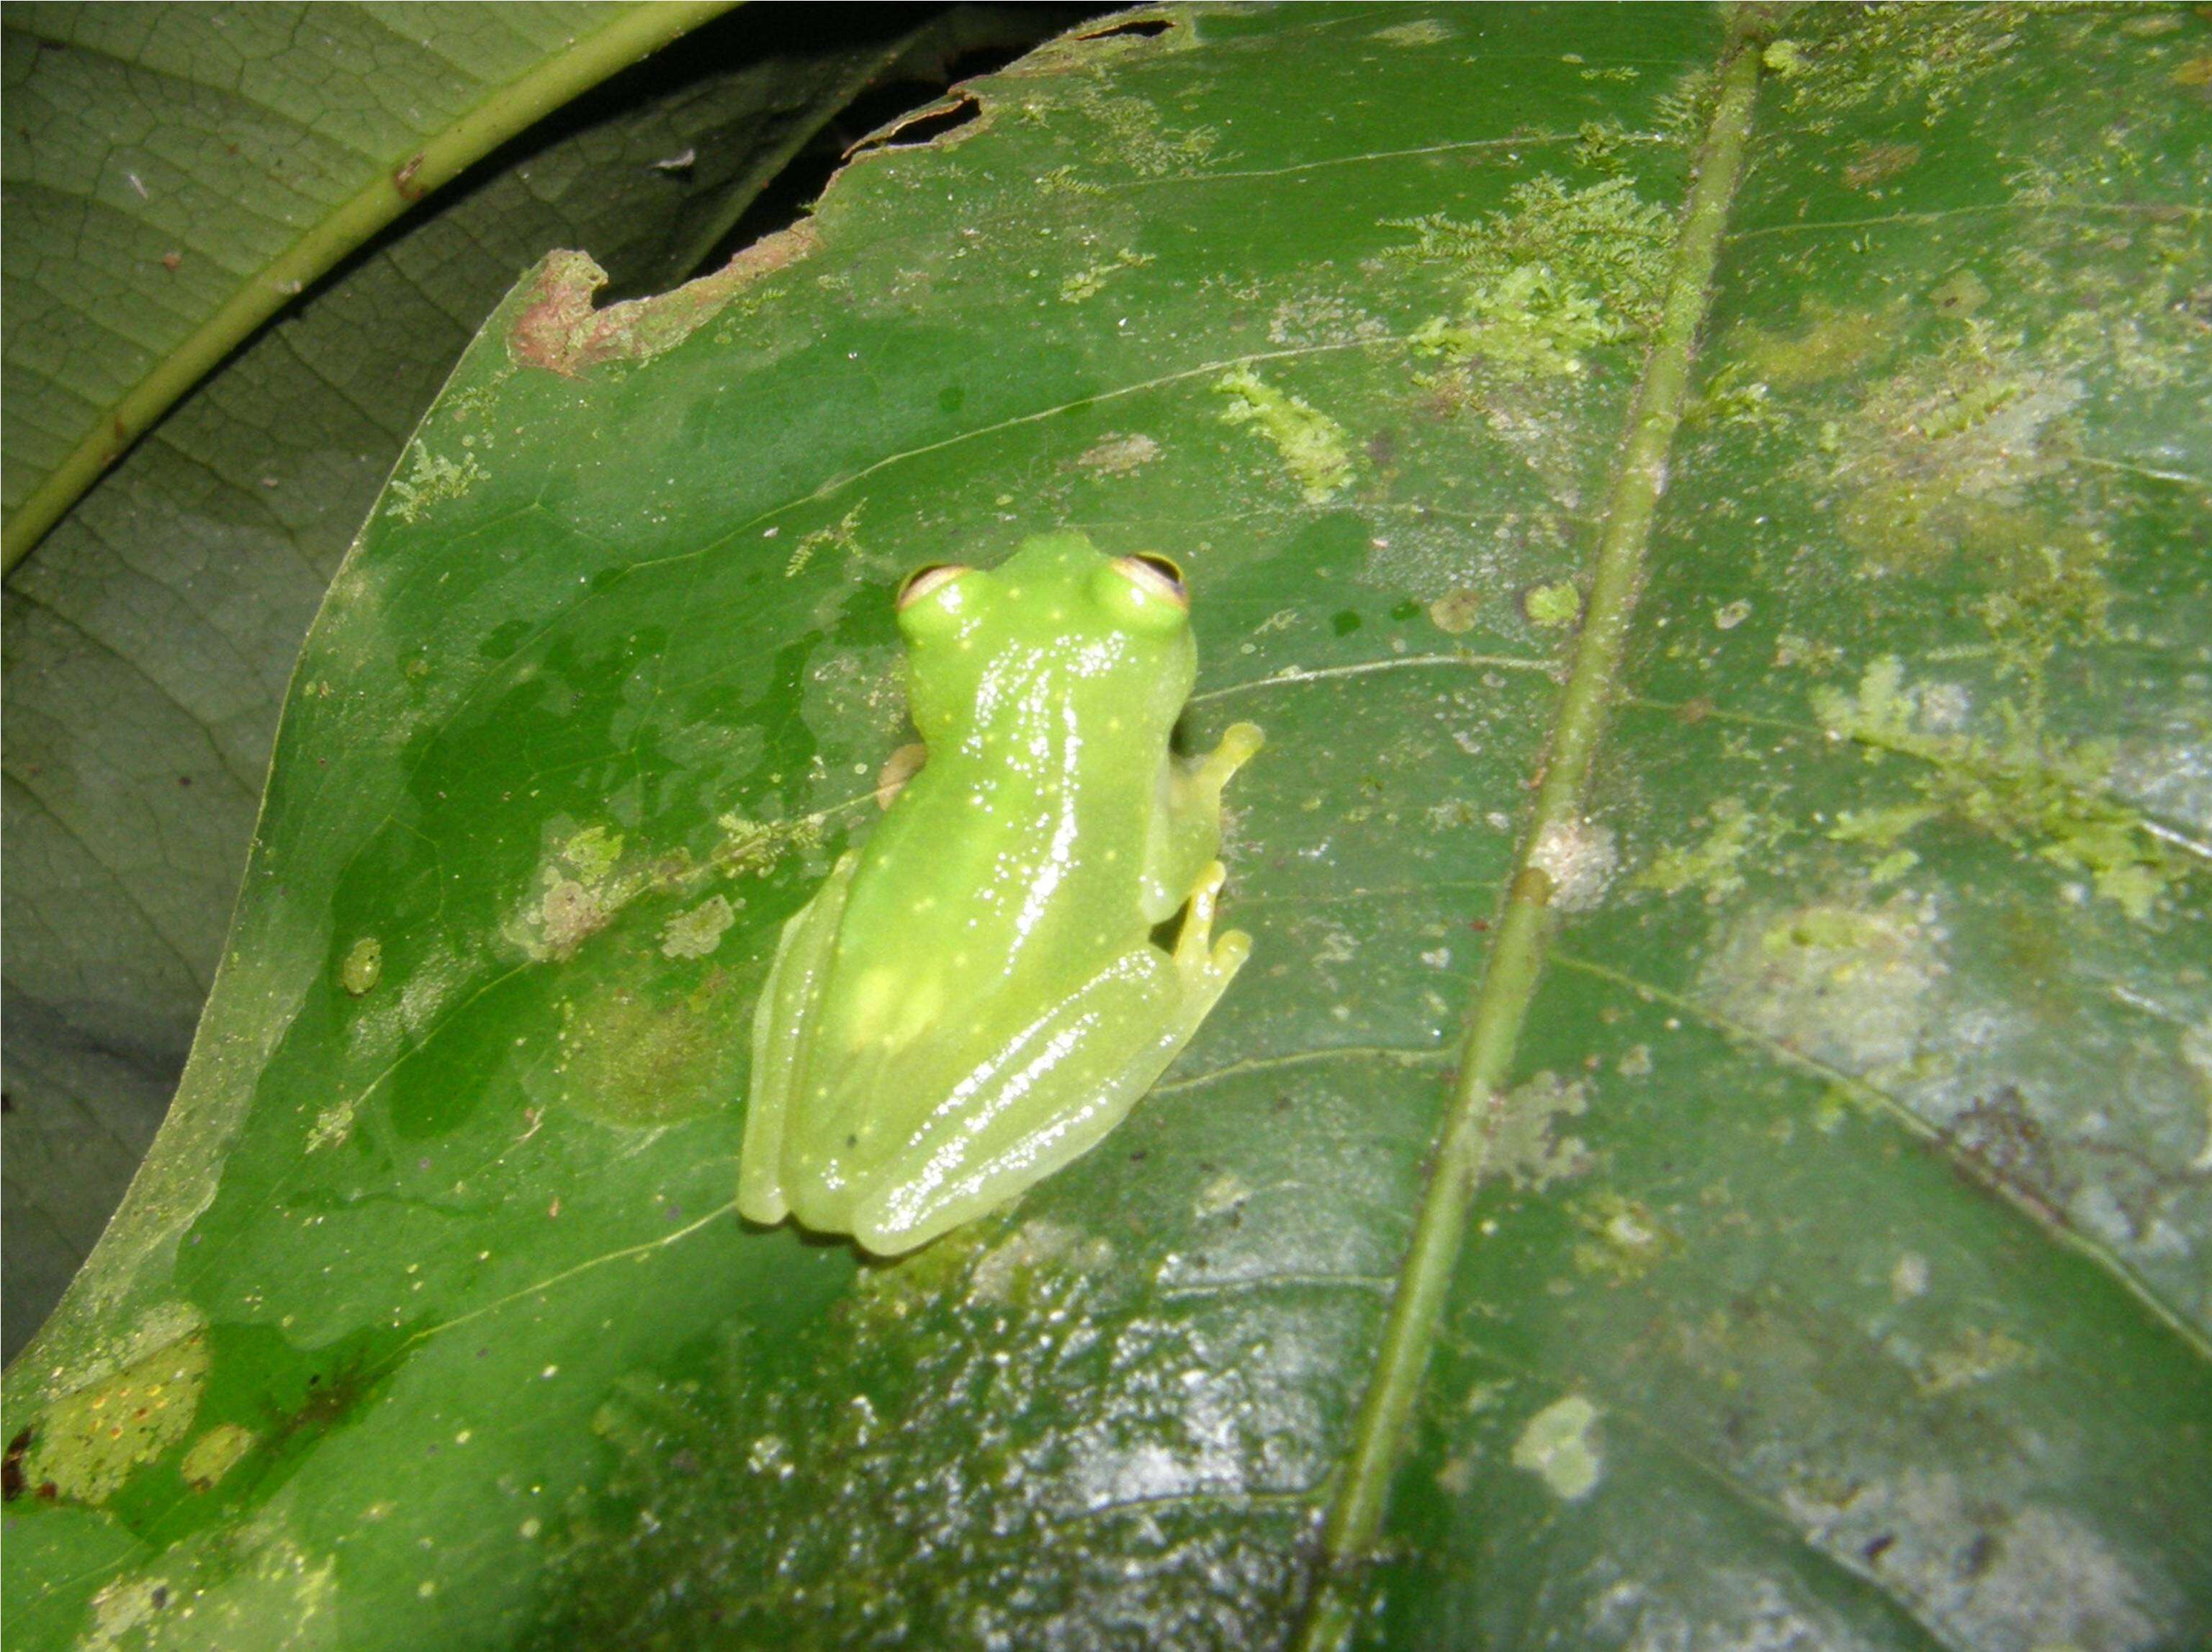 Image of Plantation Glass Frog